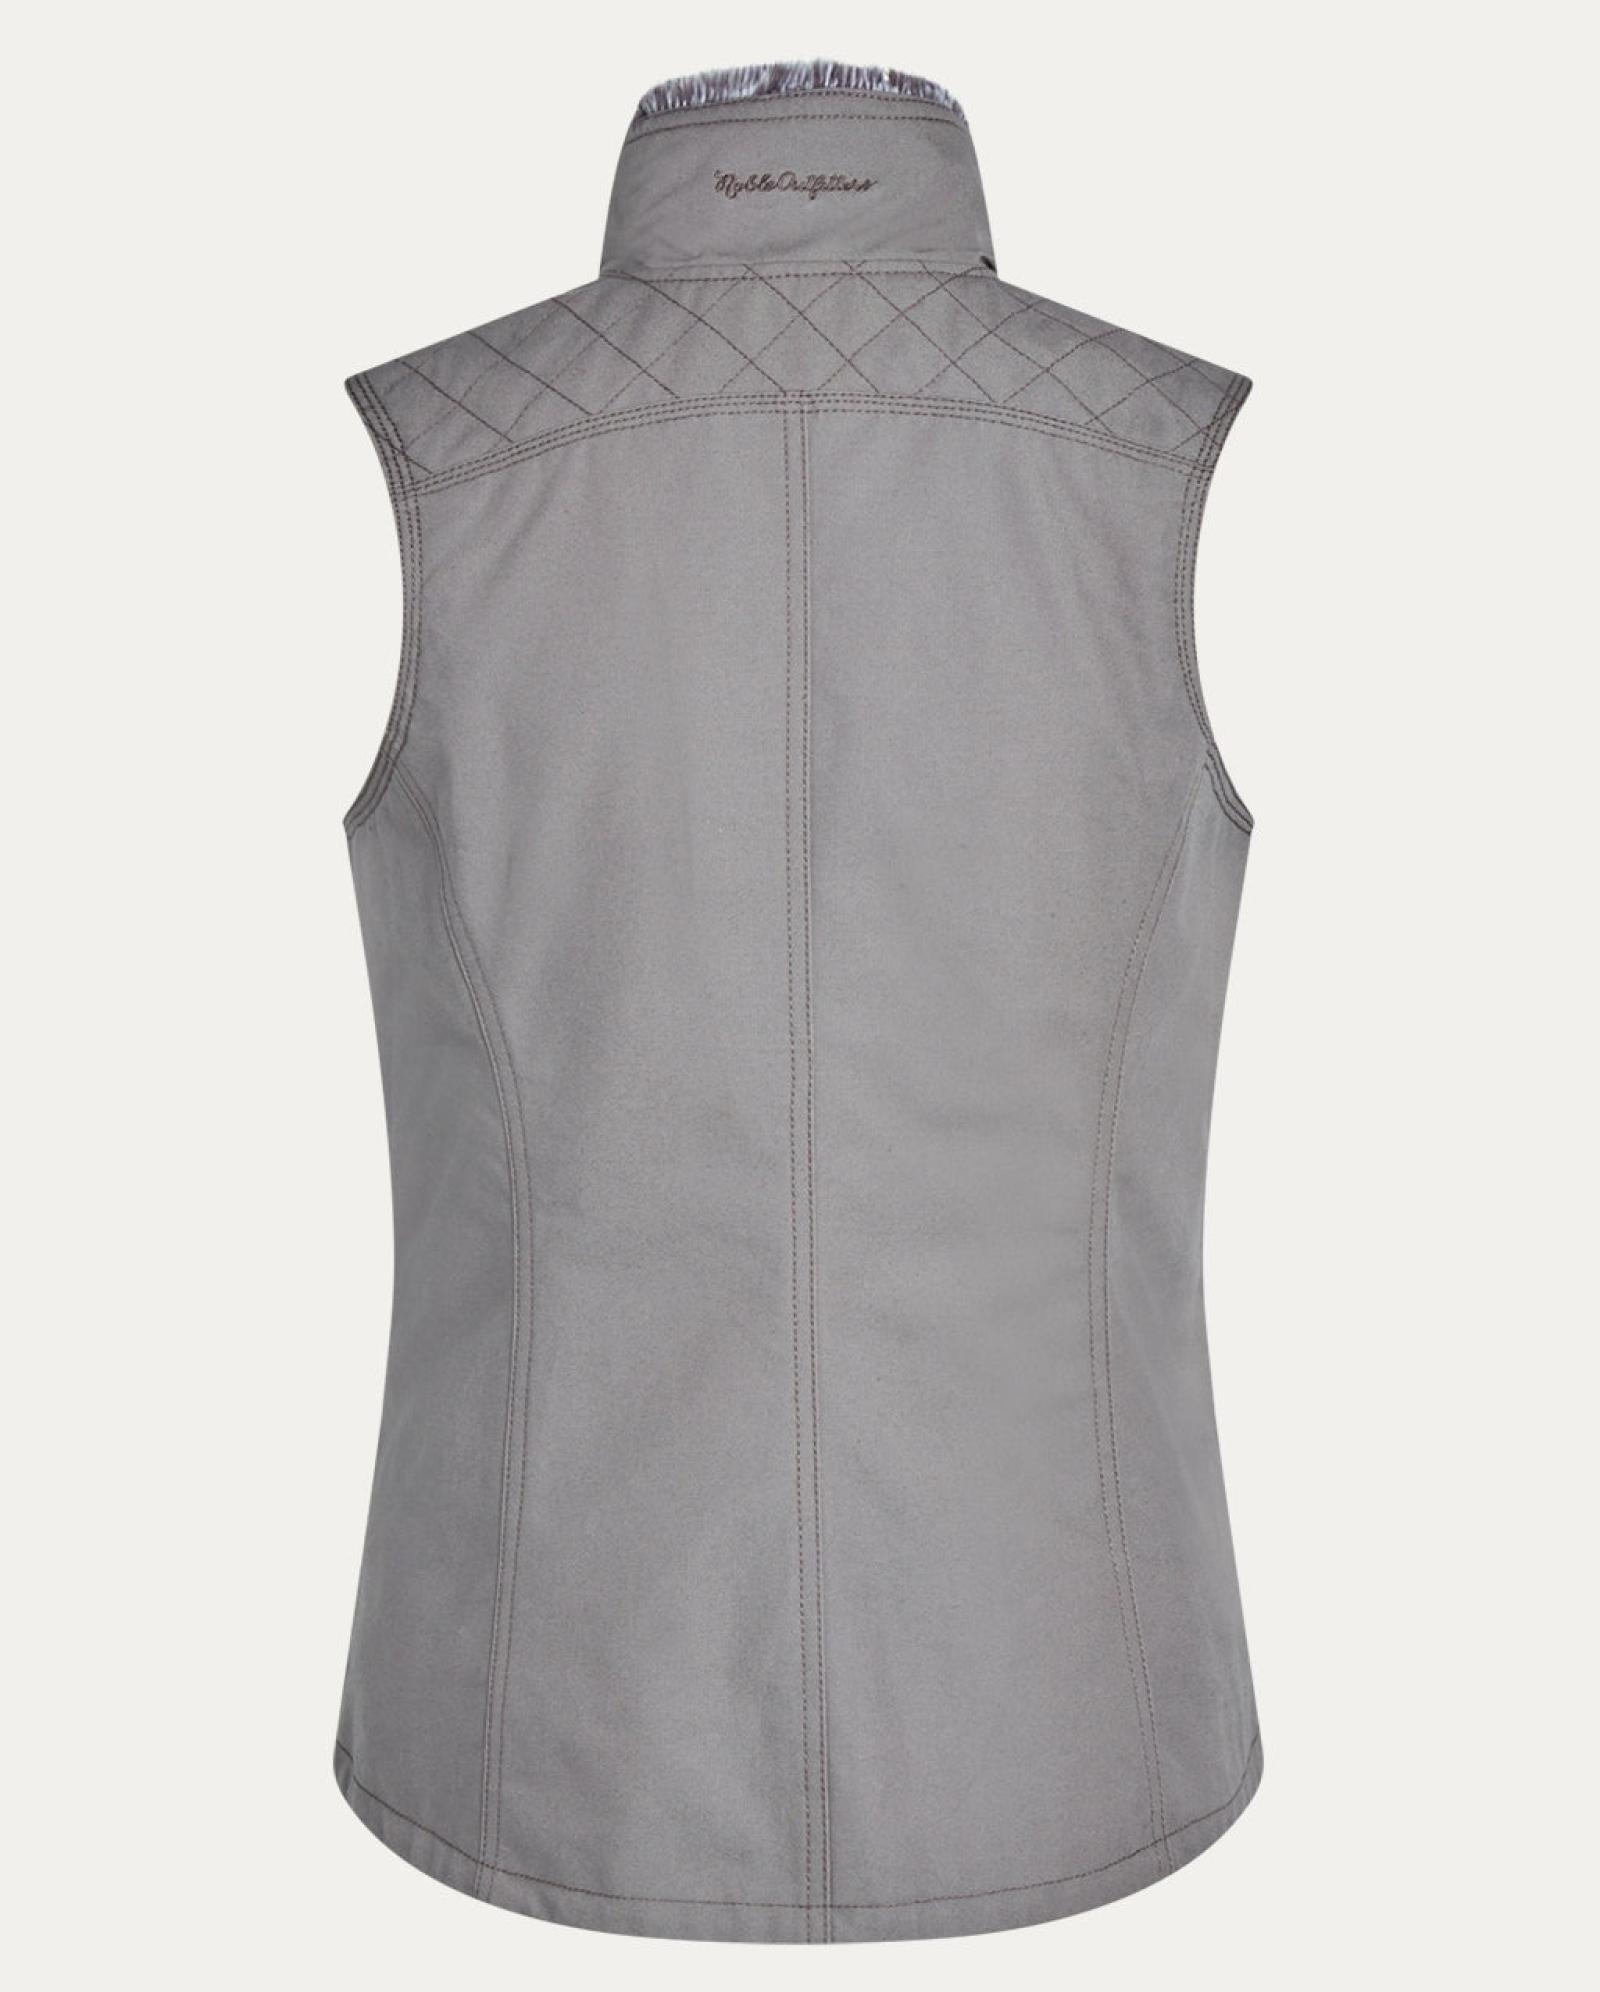 Noble Outfitters Women's Canvas Vest Black grey View